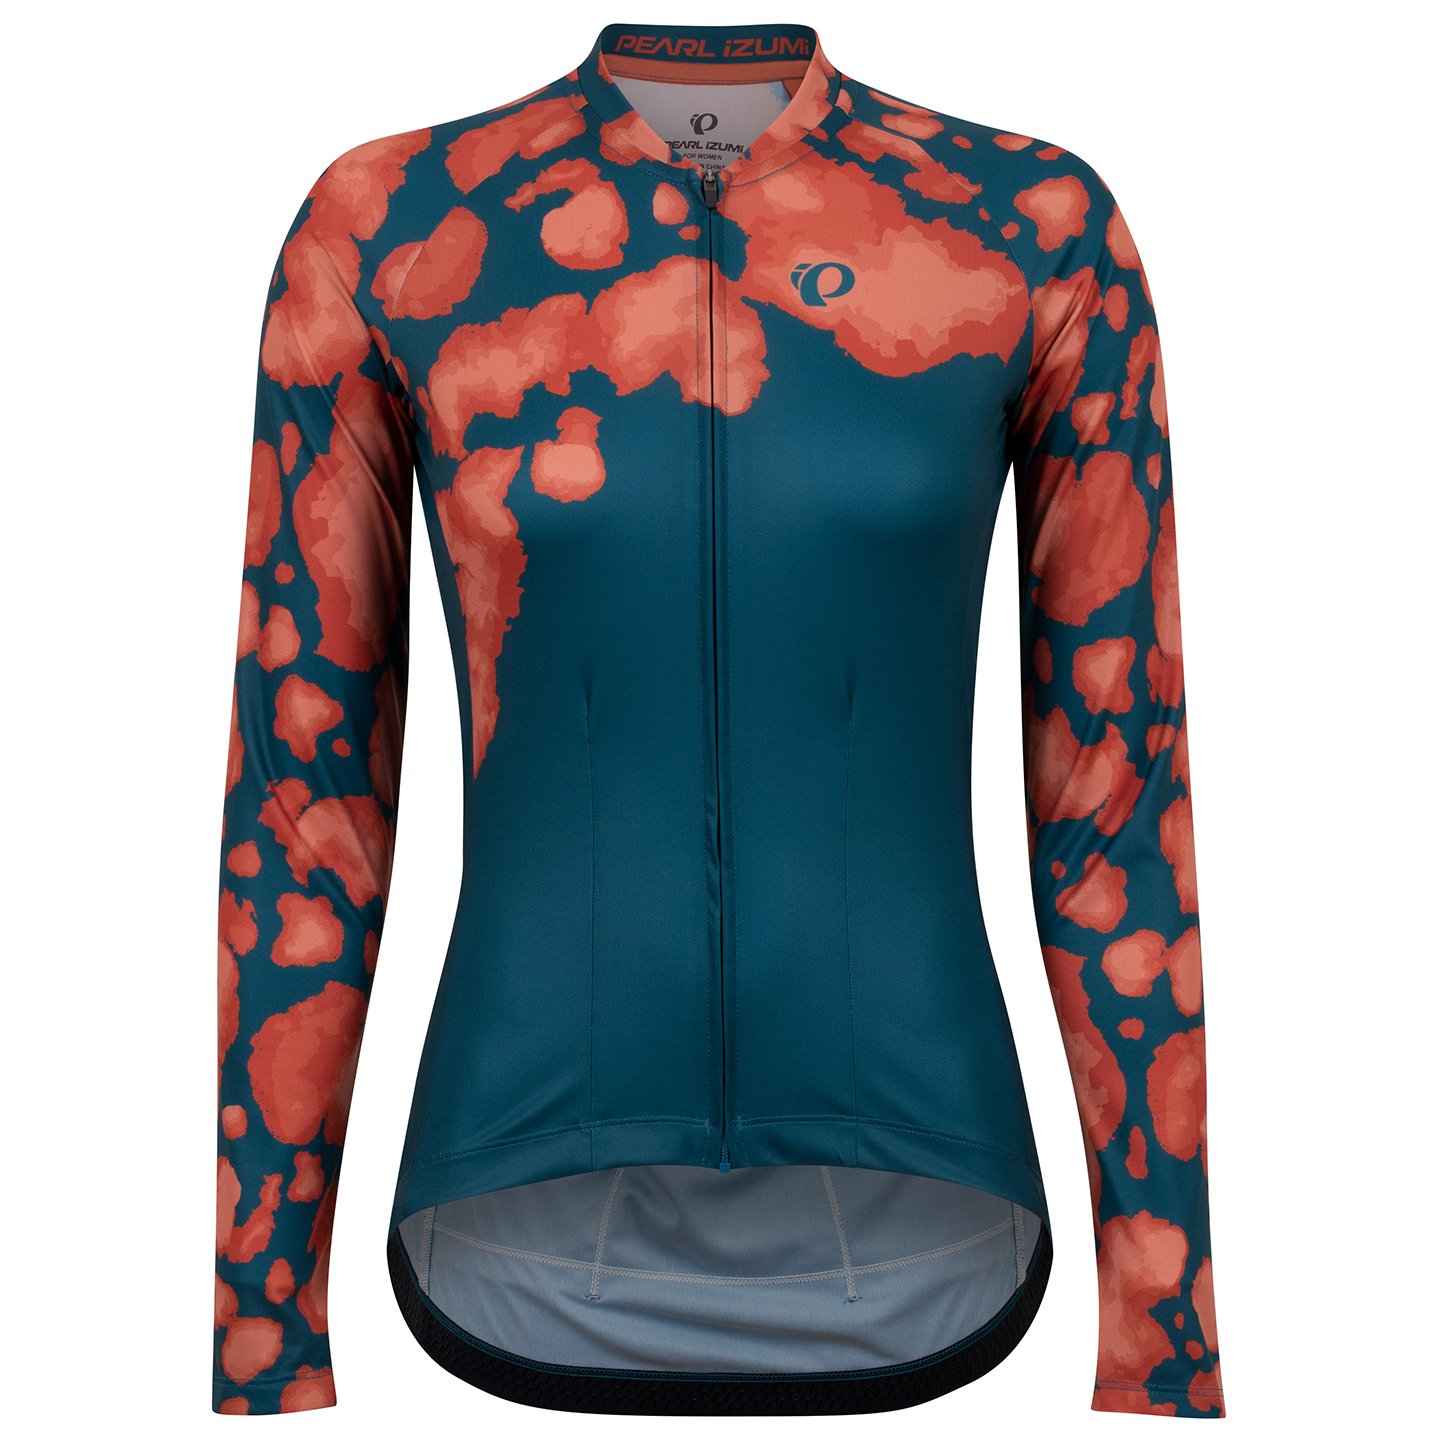 PEARL IZUMI Women’s long sleeve jersey Attack Women’s Long Sleeve Jersey, size XL, Cycle jersey, Bike gear